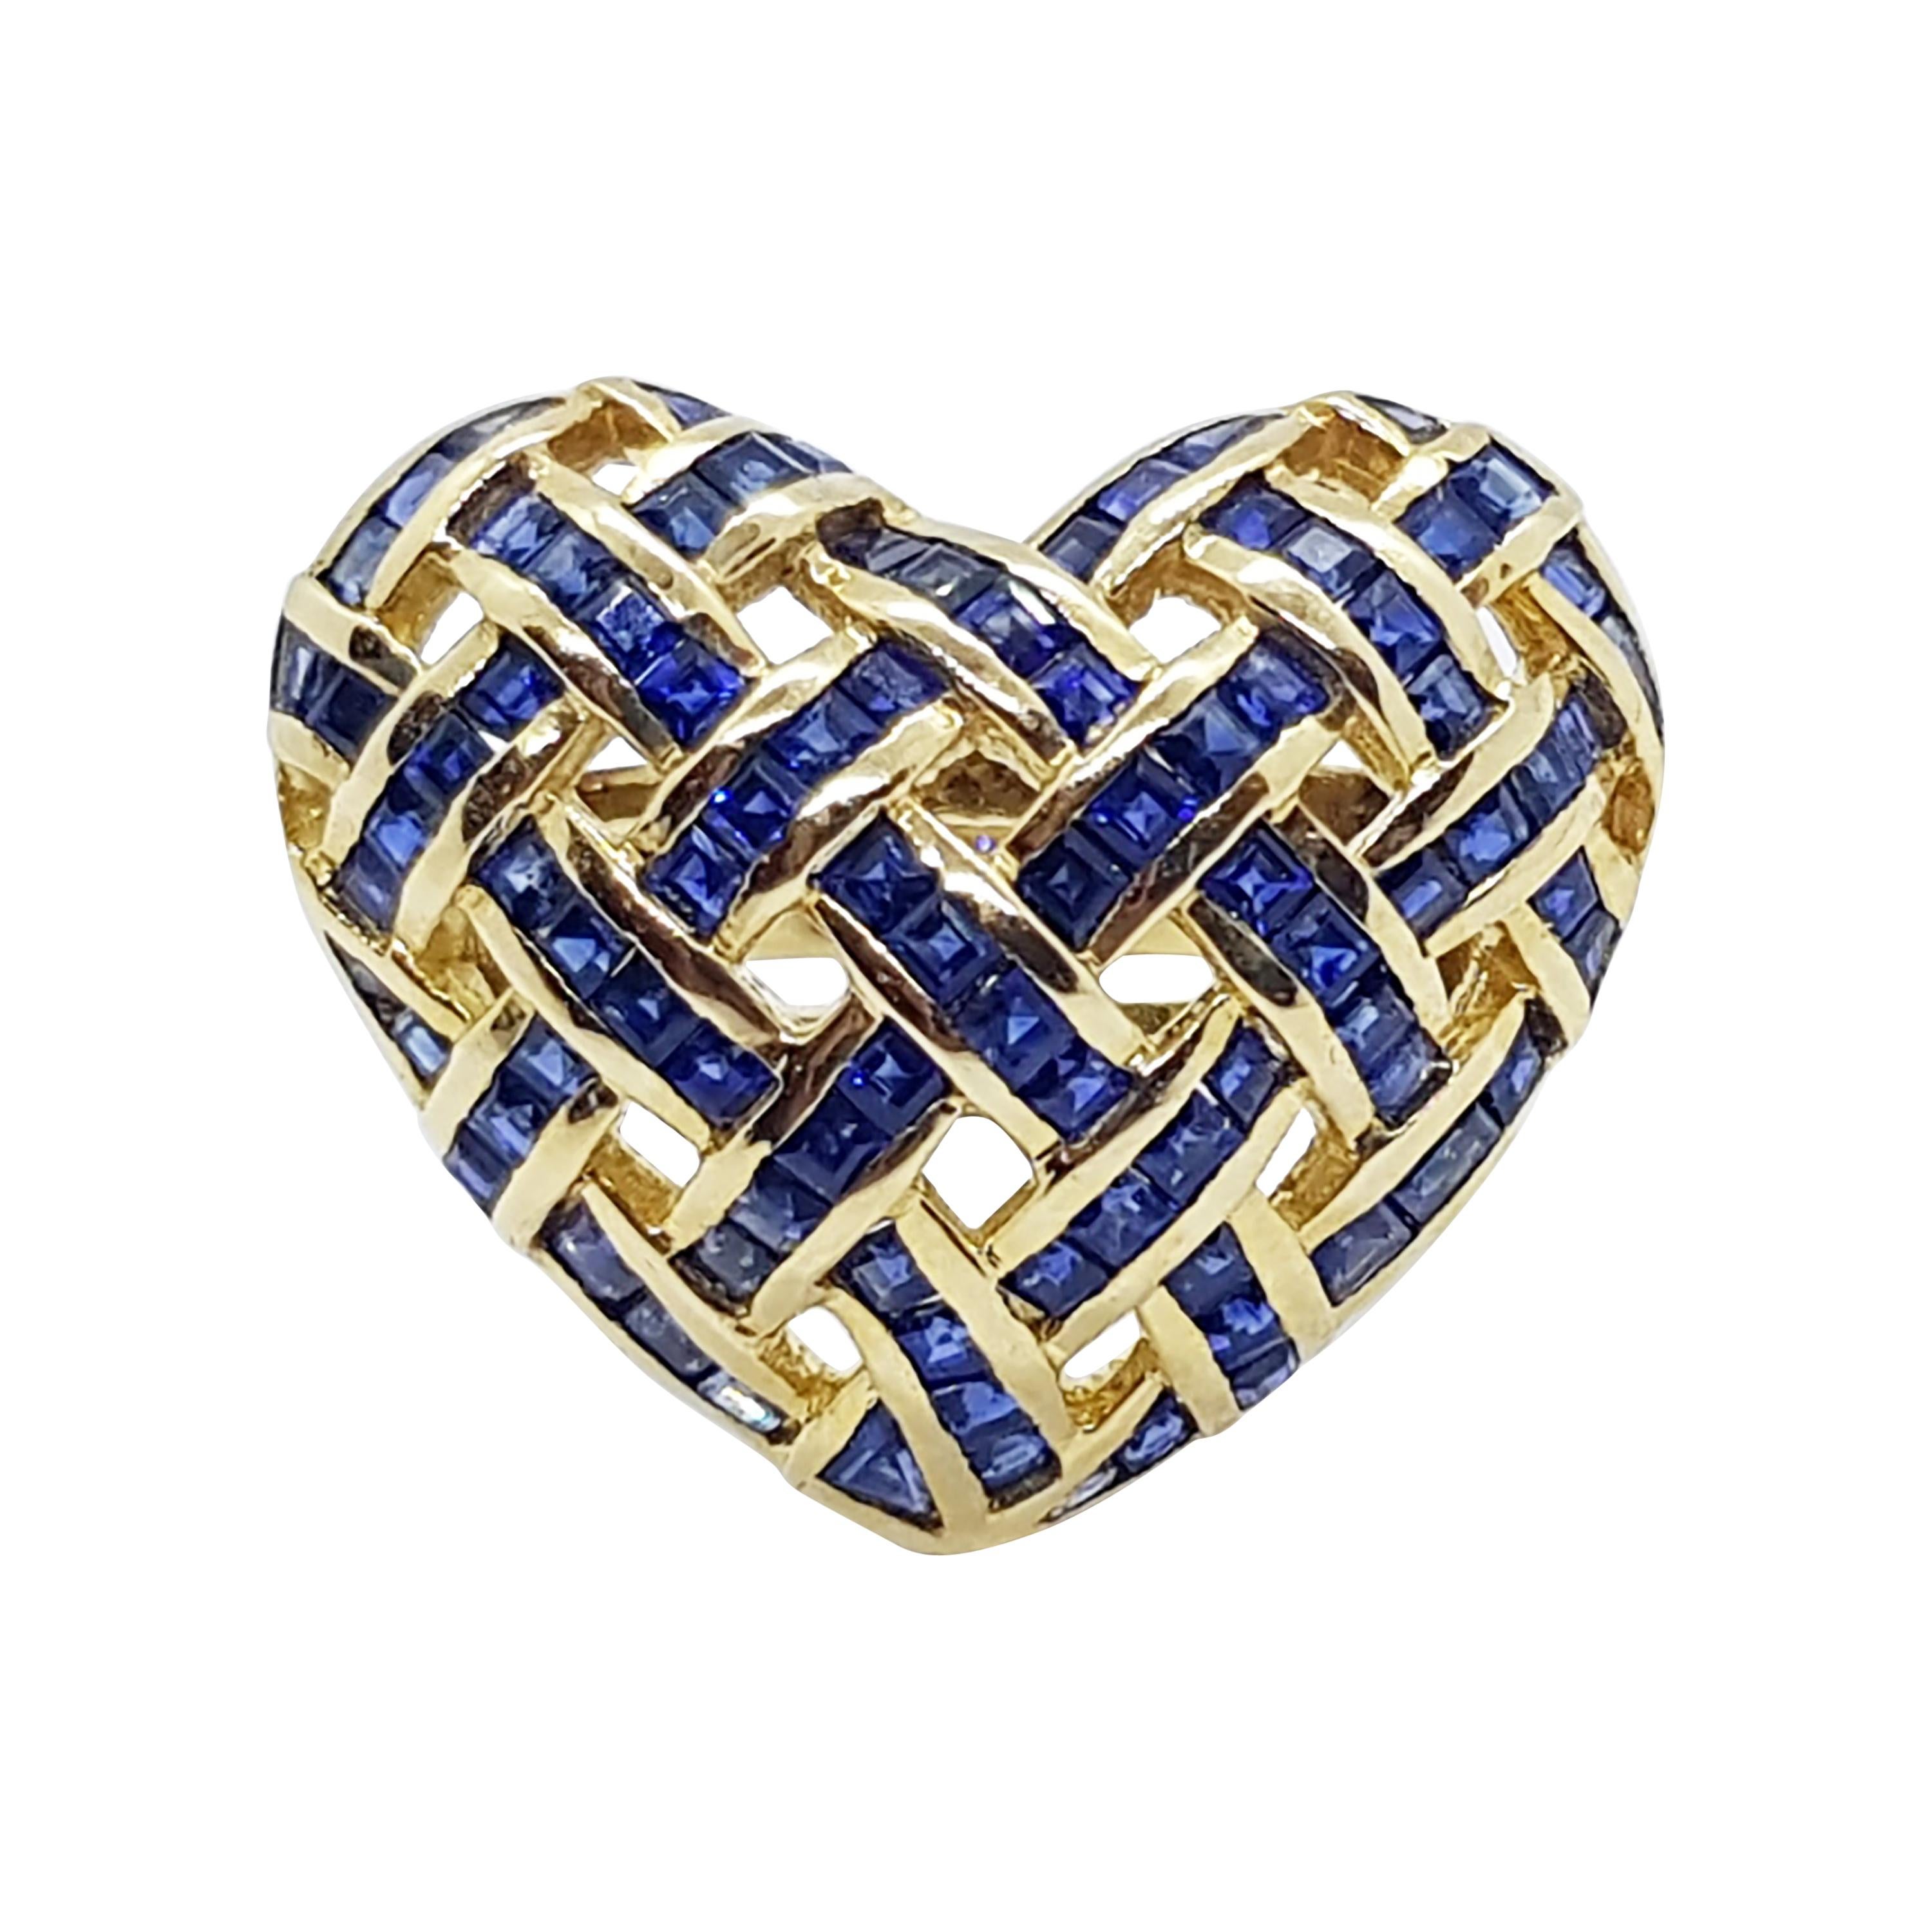 Blue Sapphire Heart Ring Set in 18 Karat Gold Settings